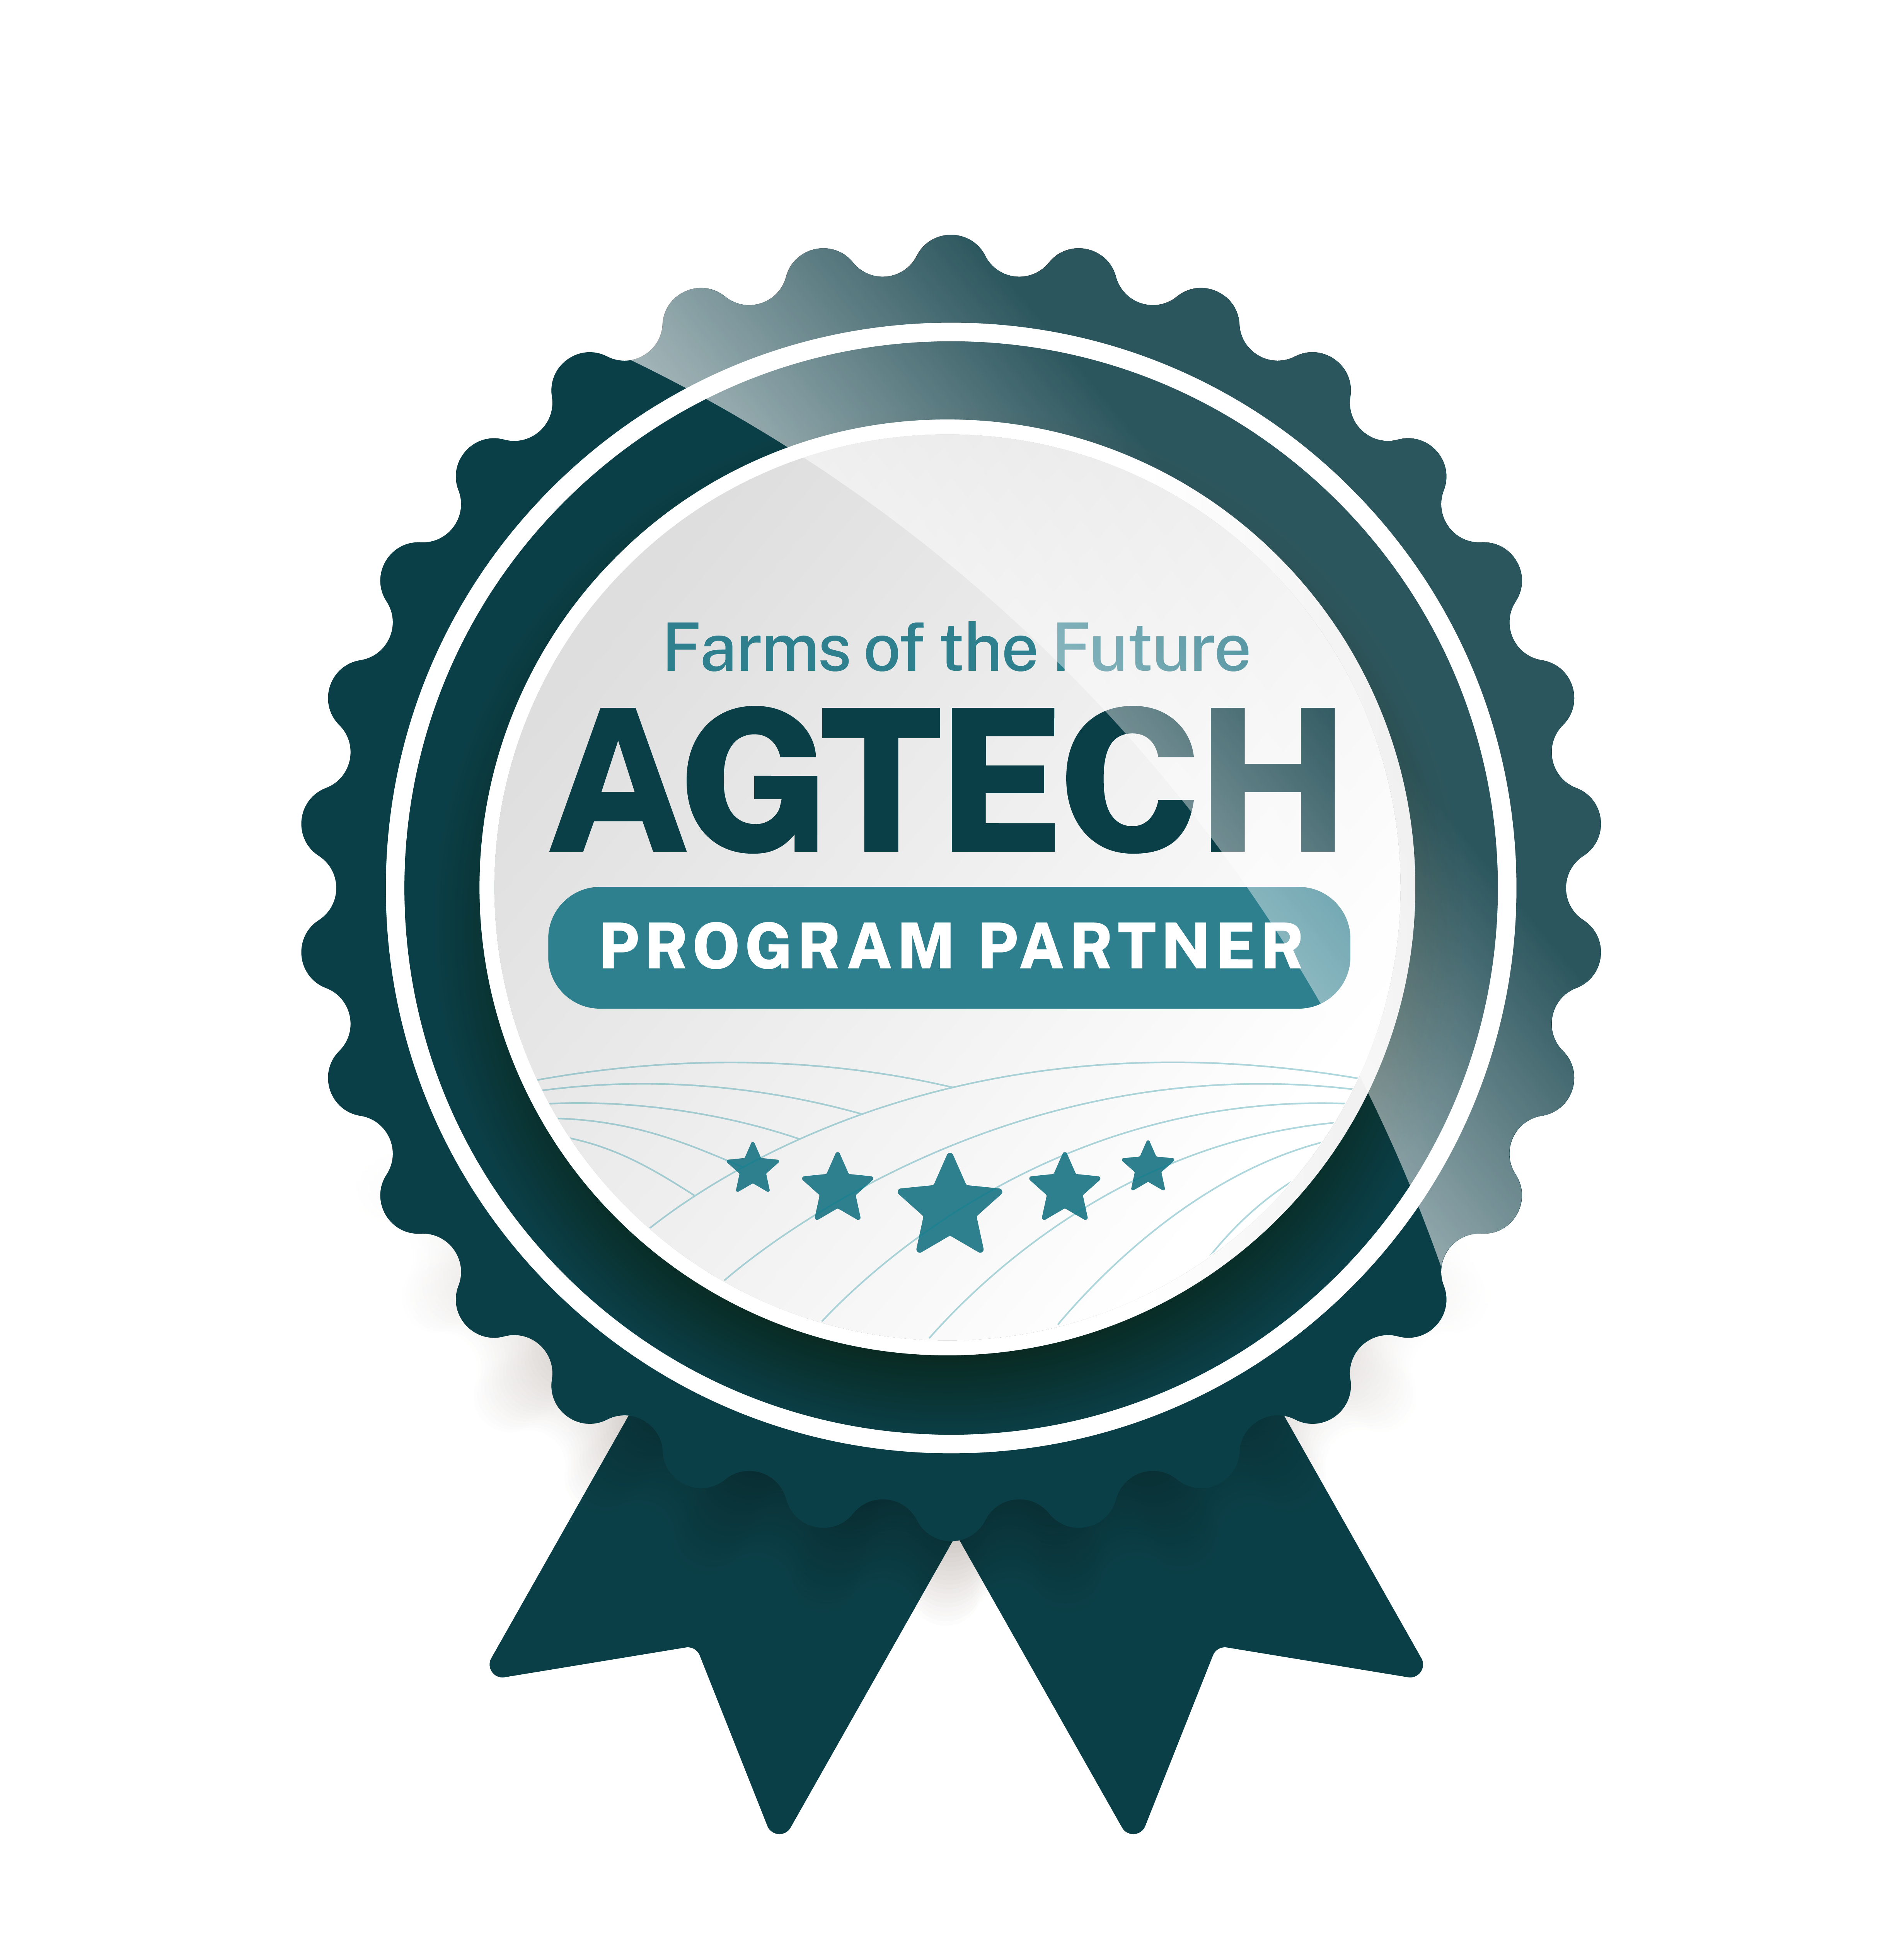 Farms of the Future - Agtech Program Partner